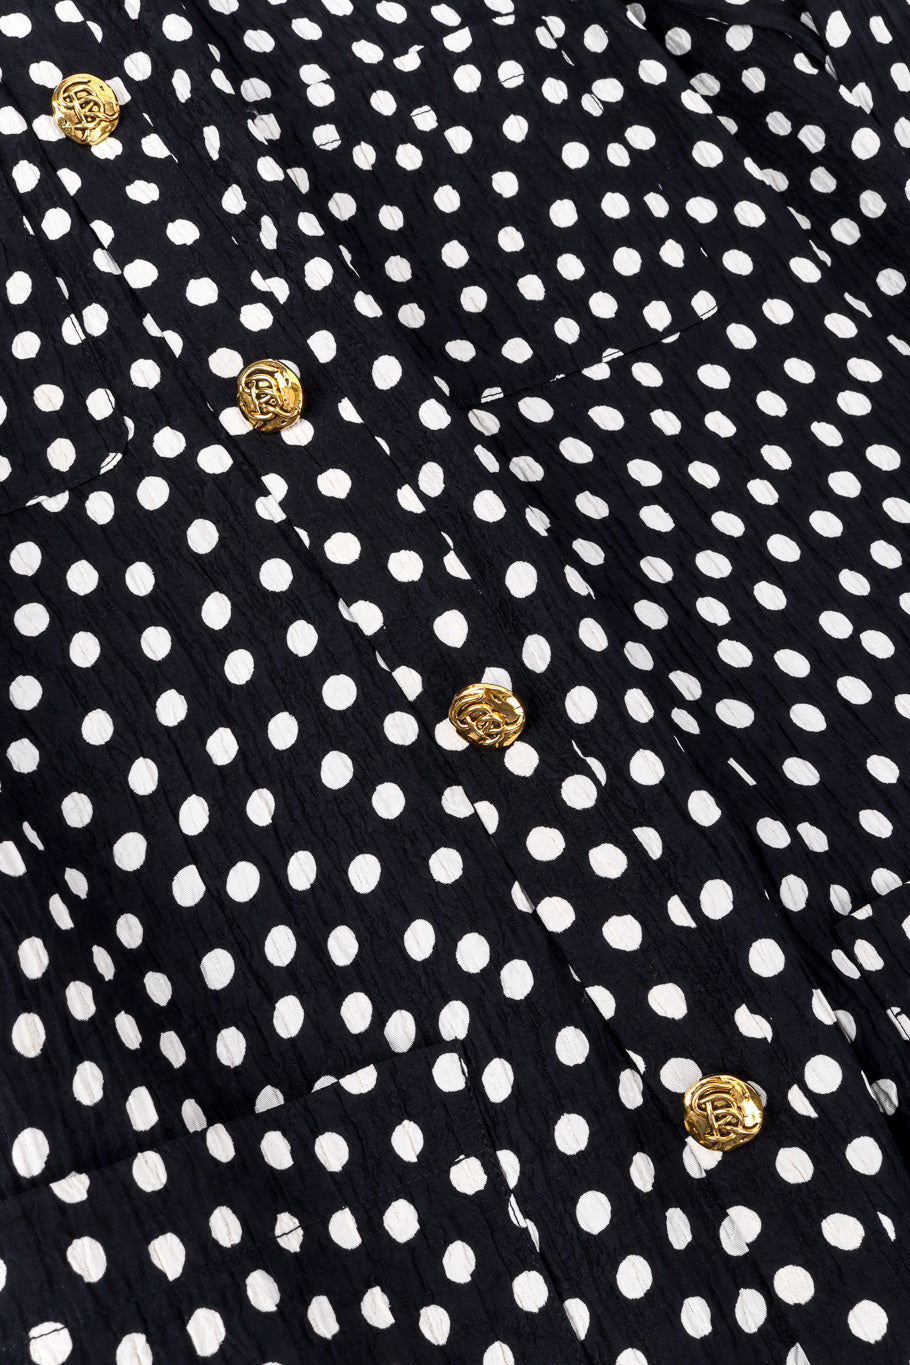 Vintage Sonia Rykiel Polka Dot Jacket and Skirt Set front button closure closeup @recessla